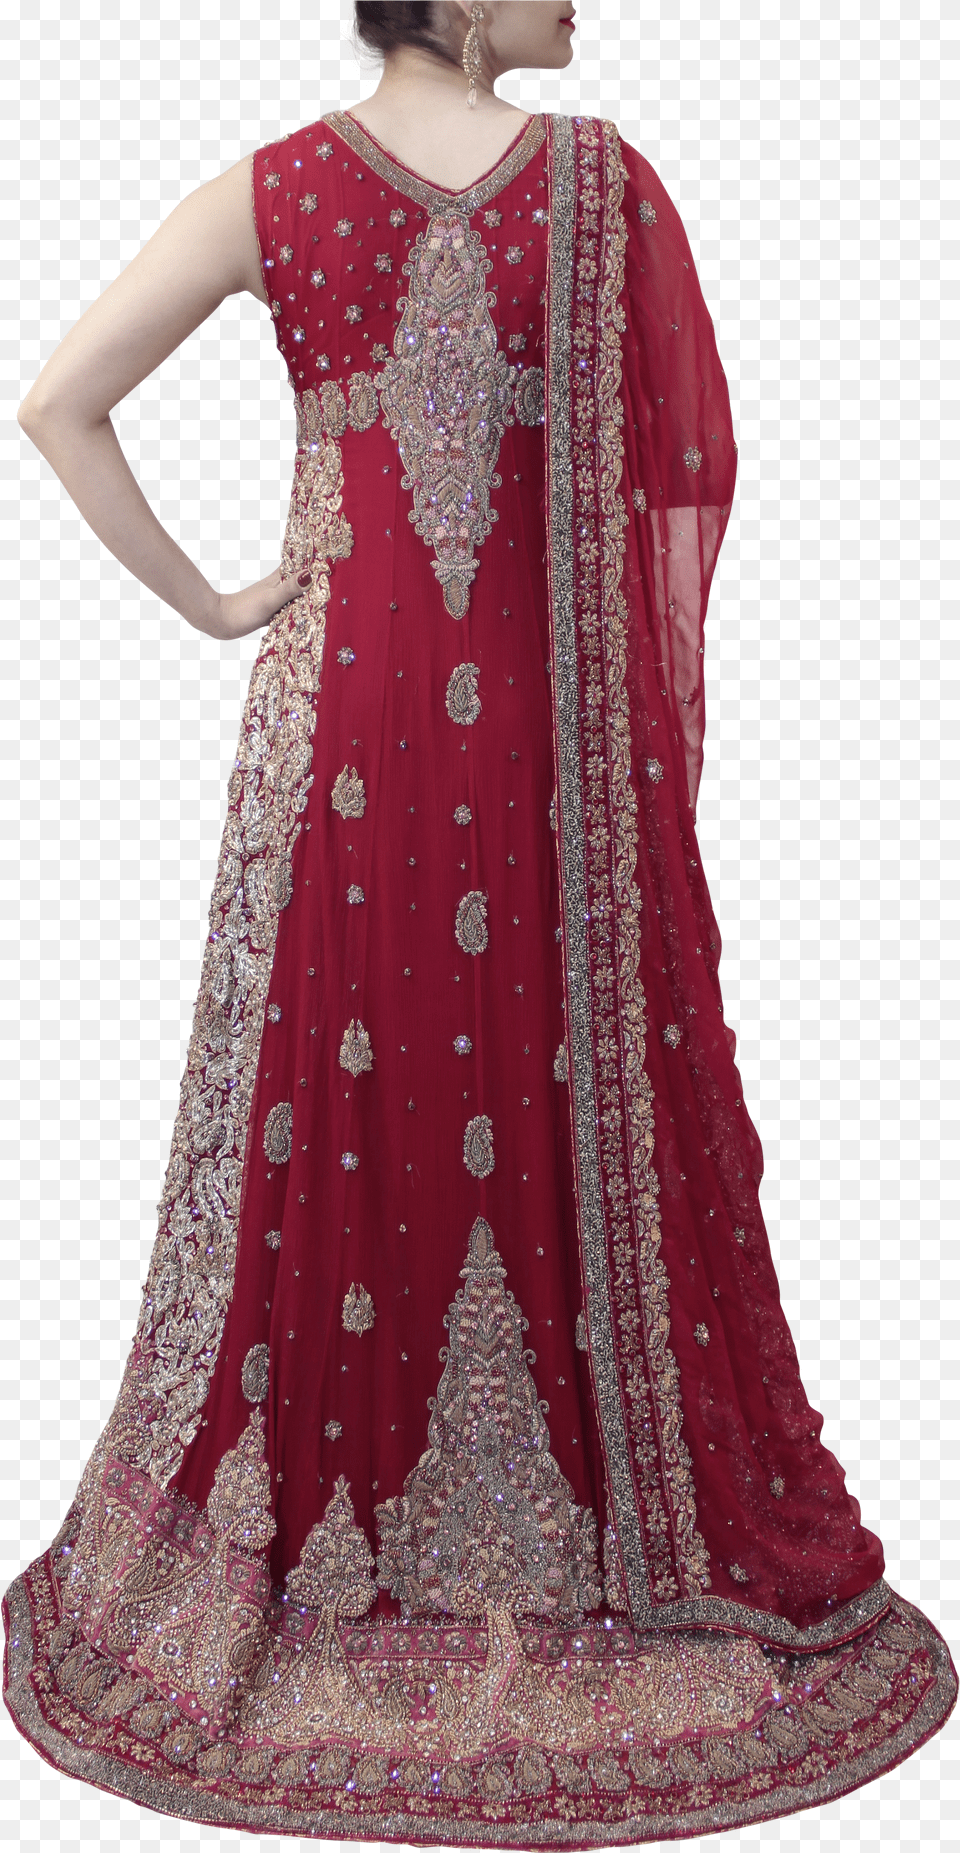 Maroon And Pink Pakistani Bridal Lehenga Gown Png Image